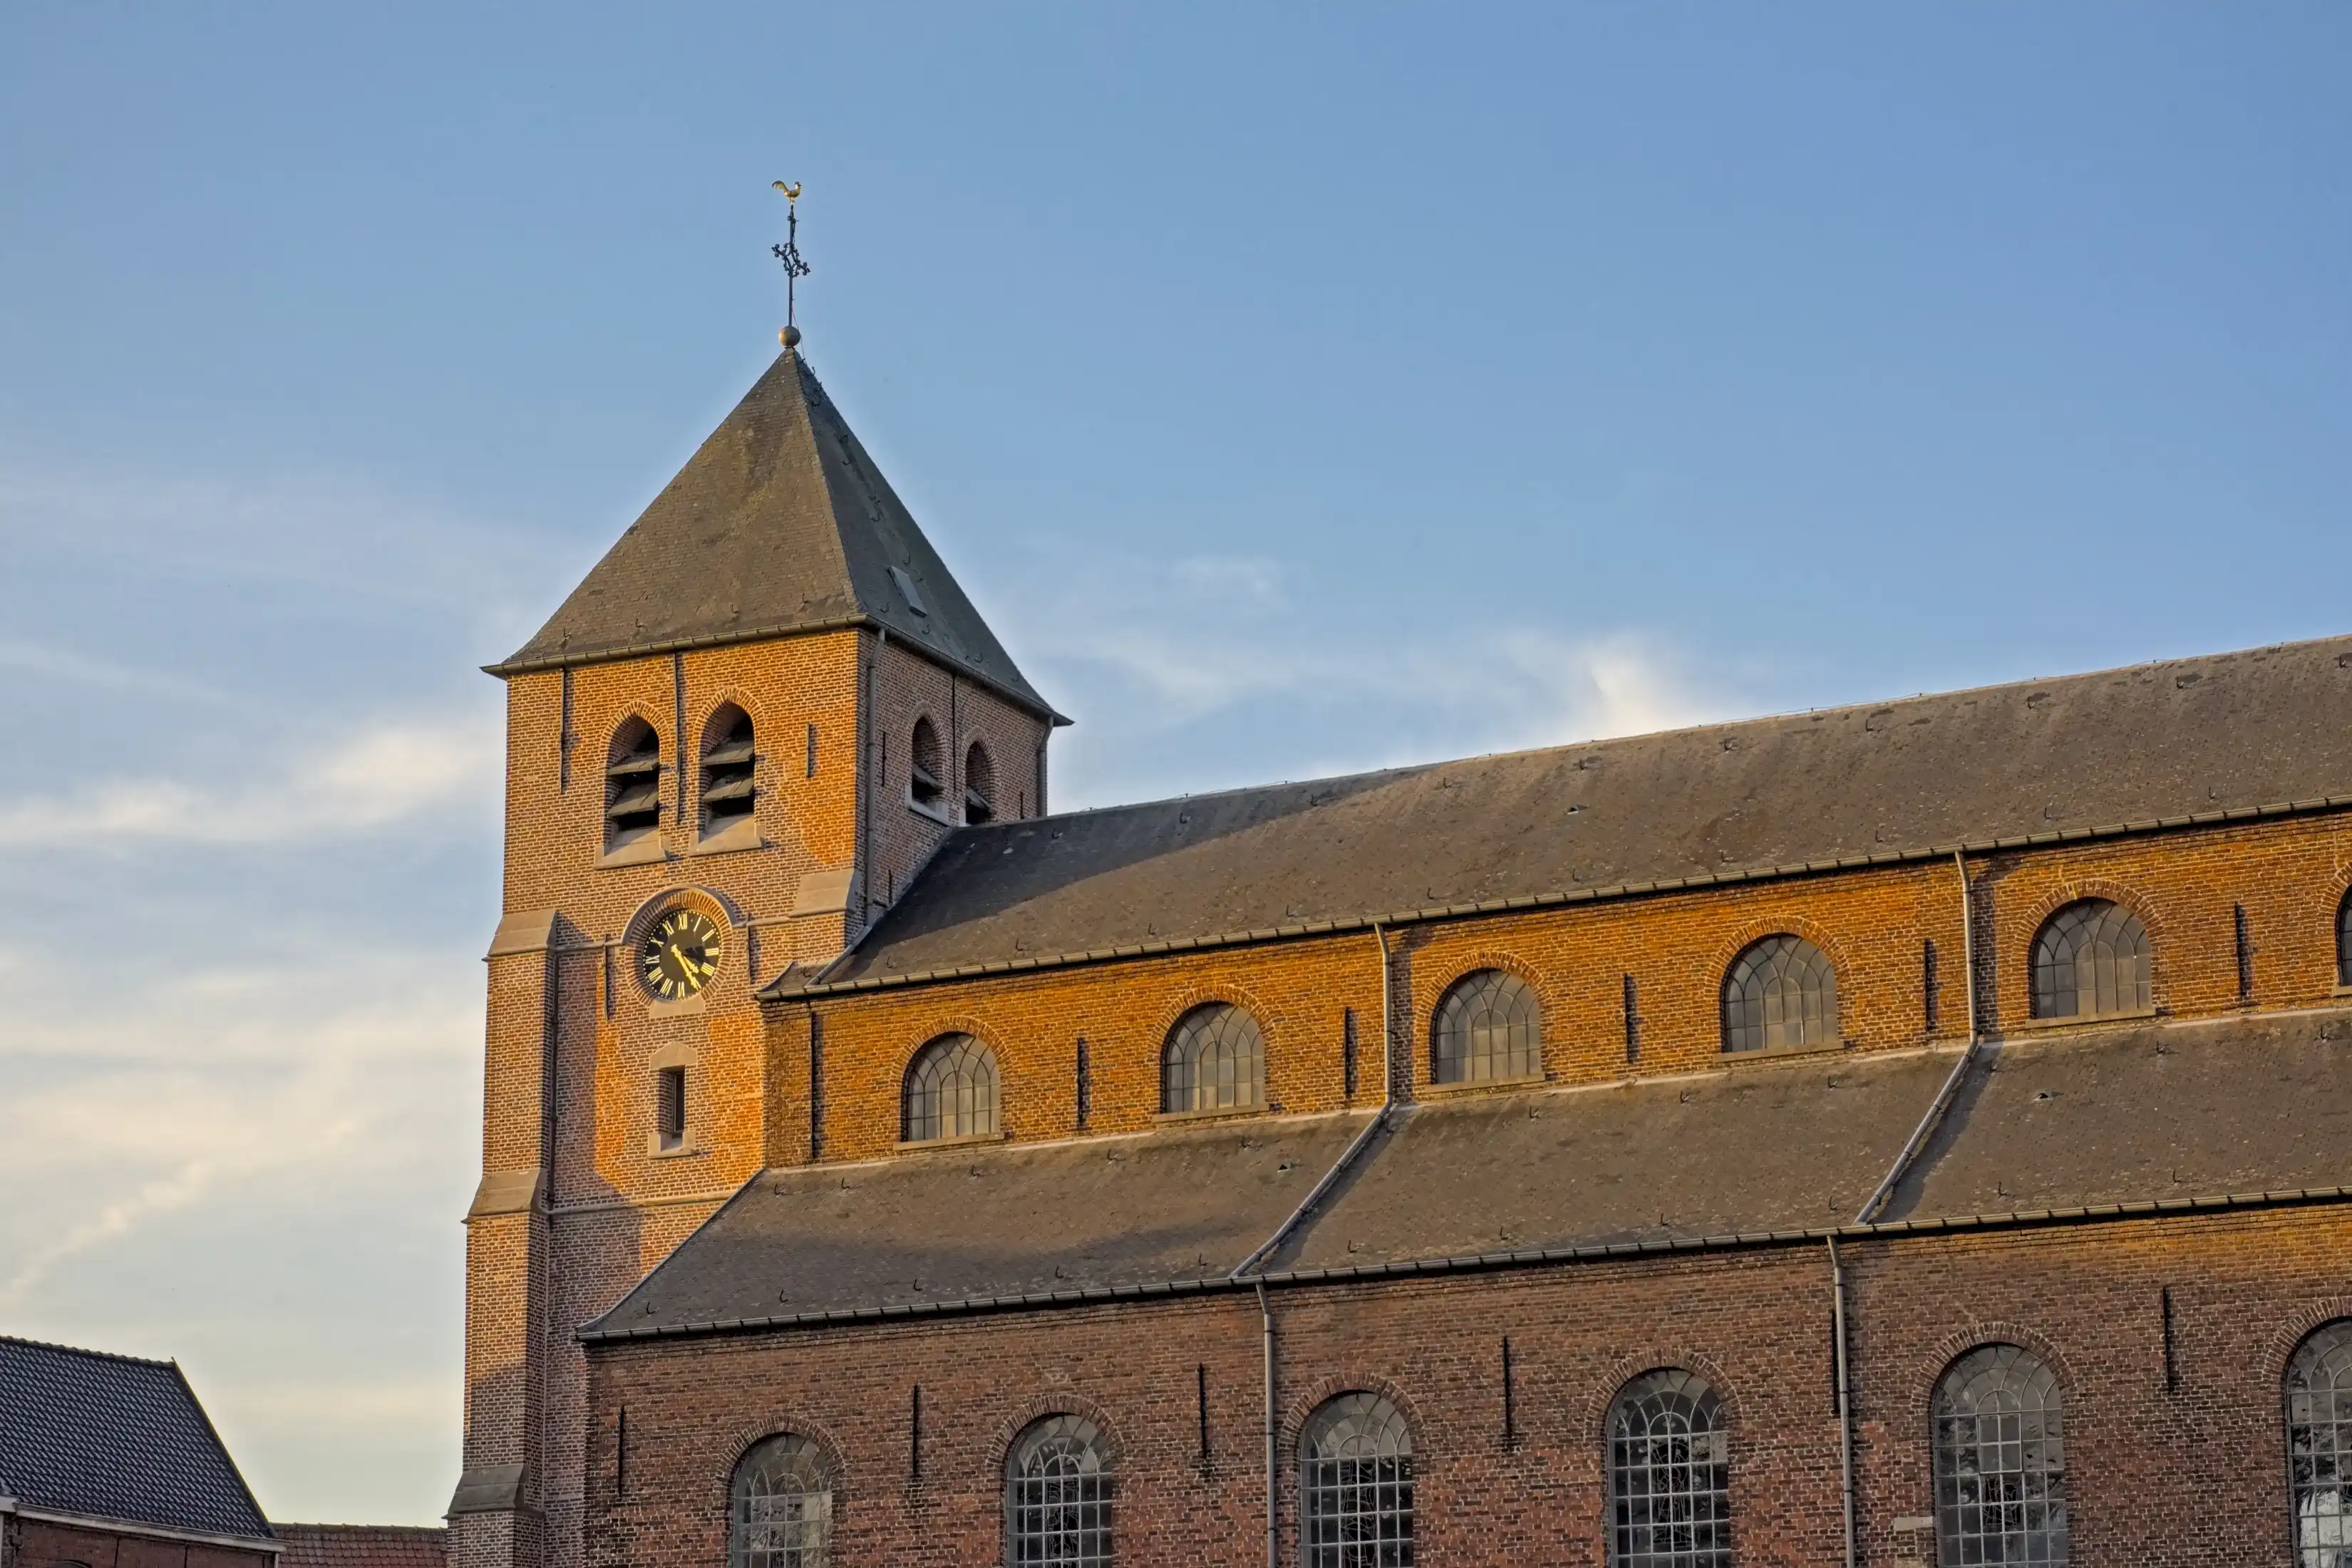 Clock tower of Saint Britius historical parish church in the village of Etikhove, Oudenaarde, Flanders, Belgium 